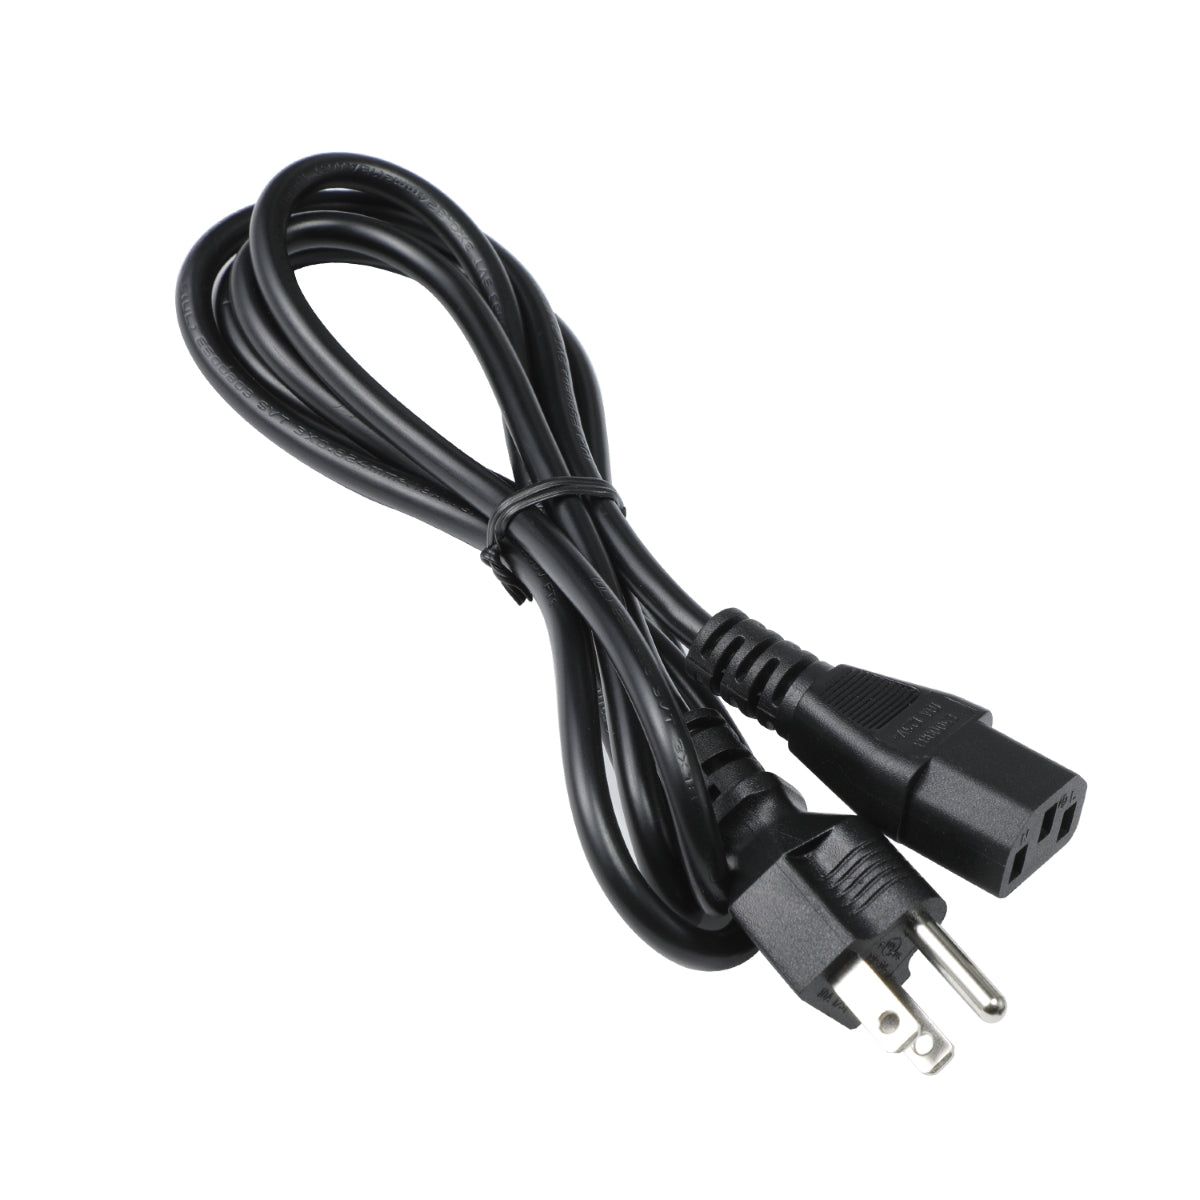 Power Cord for Dell U3223QE Monitor